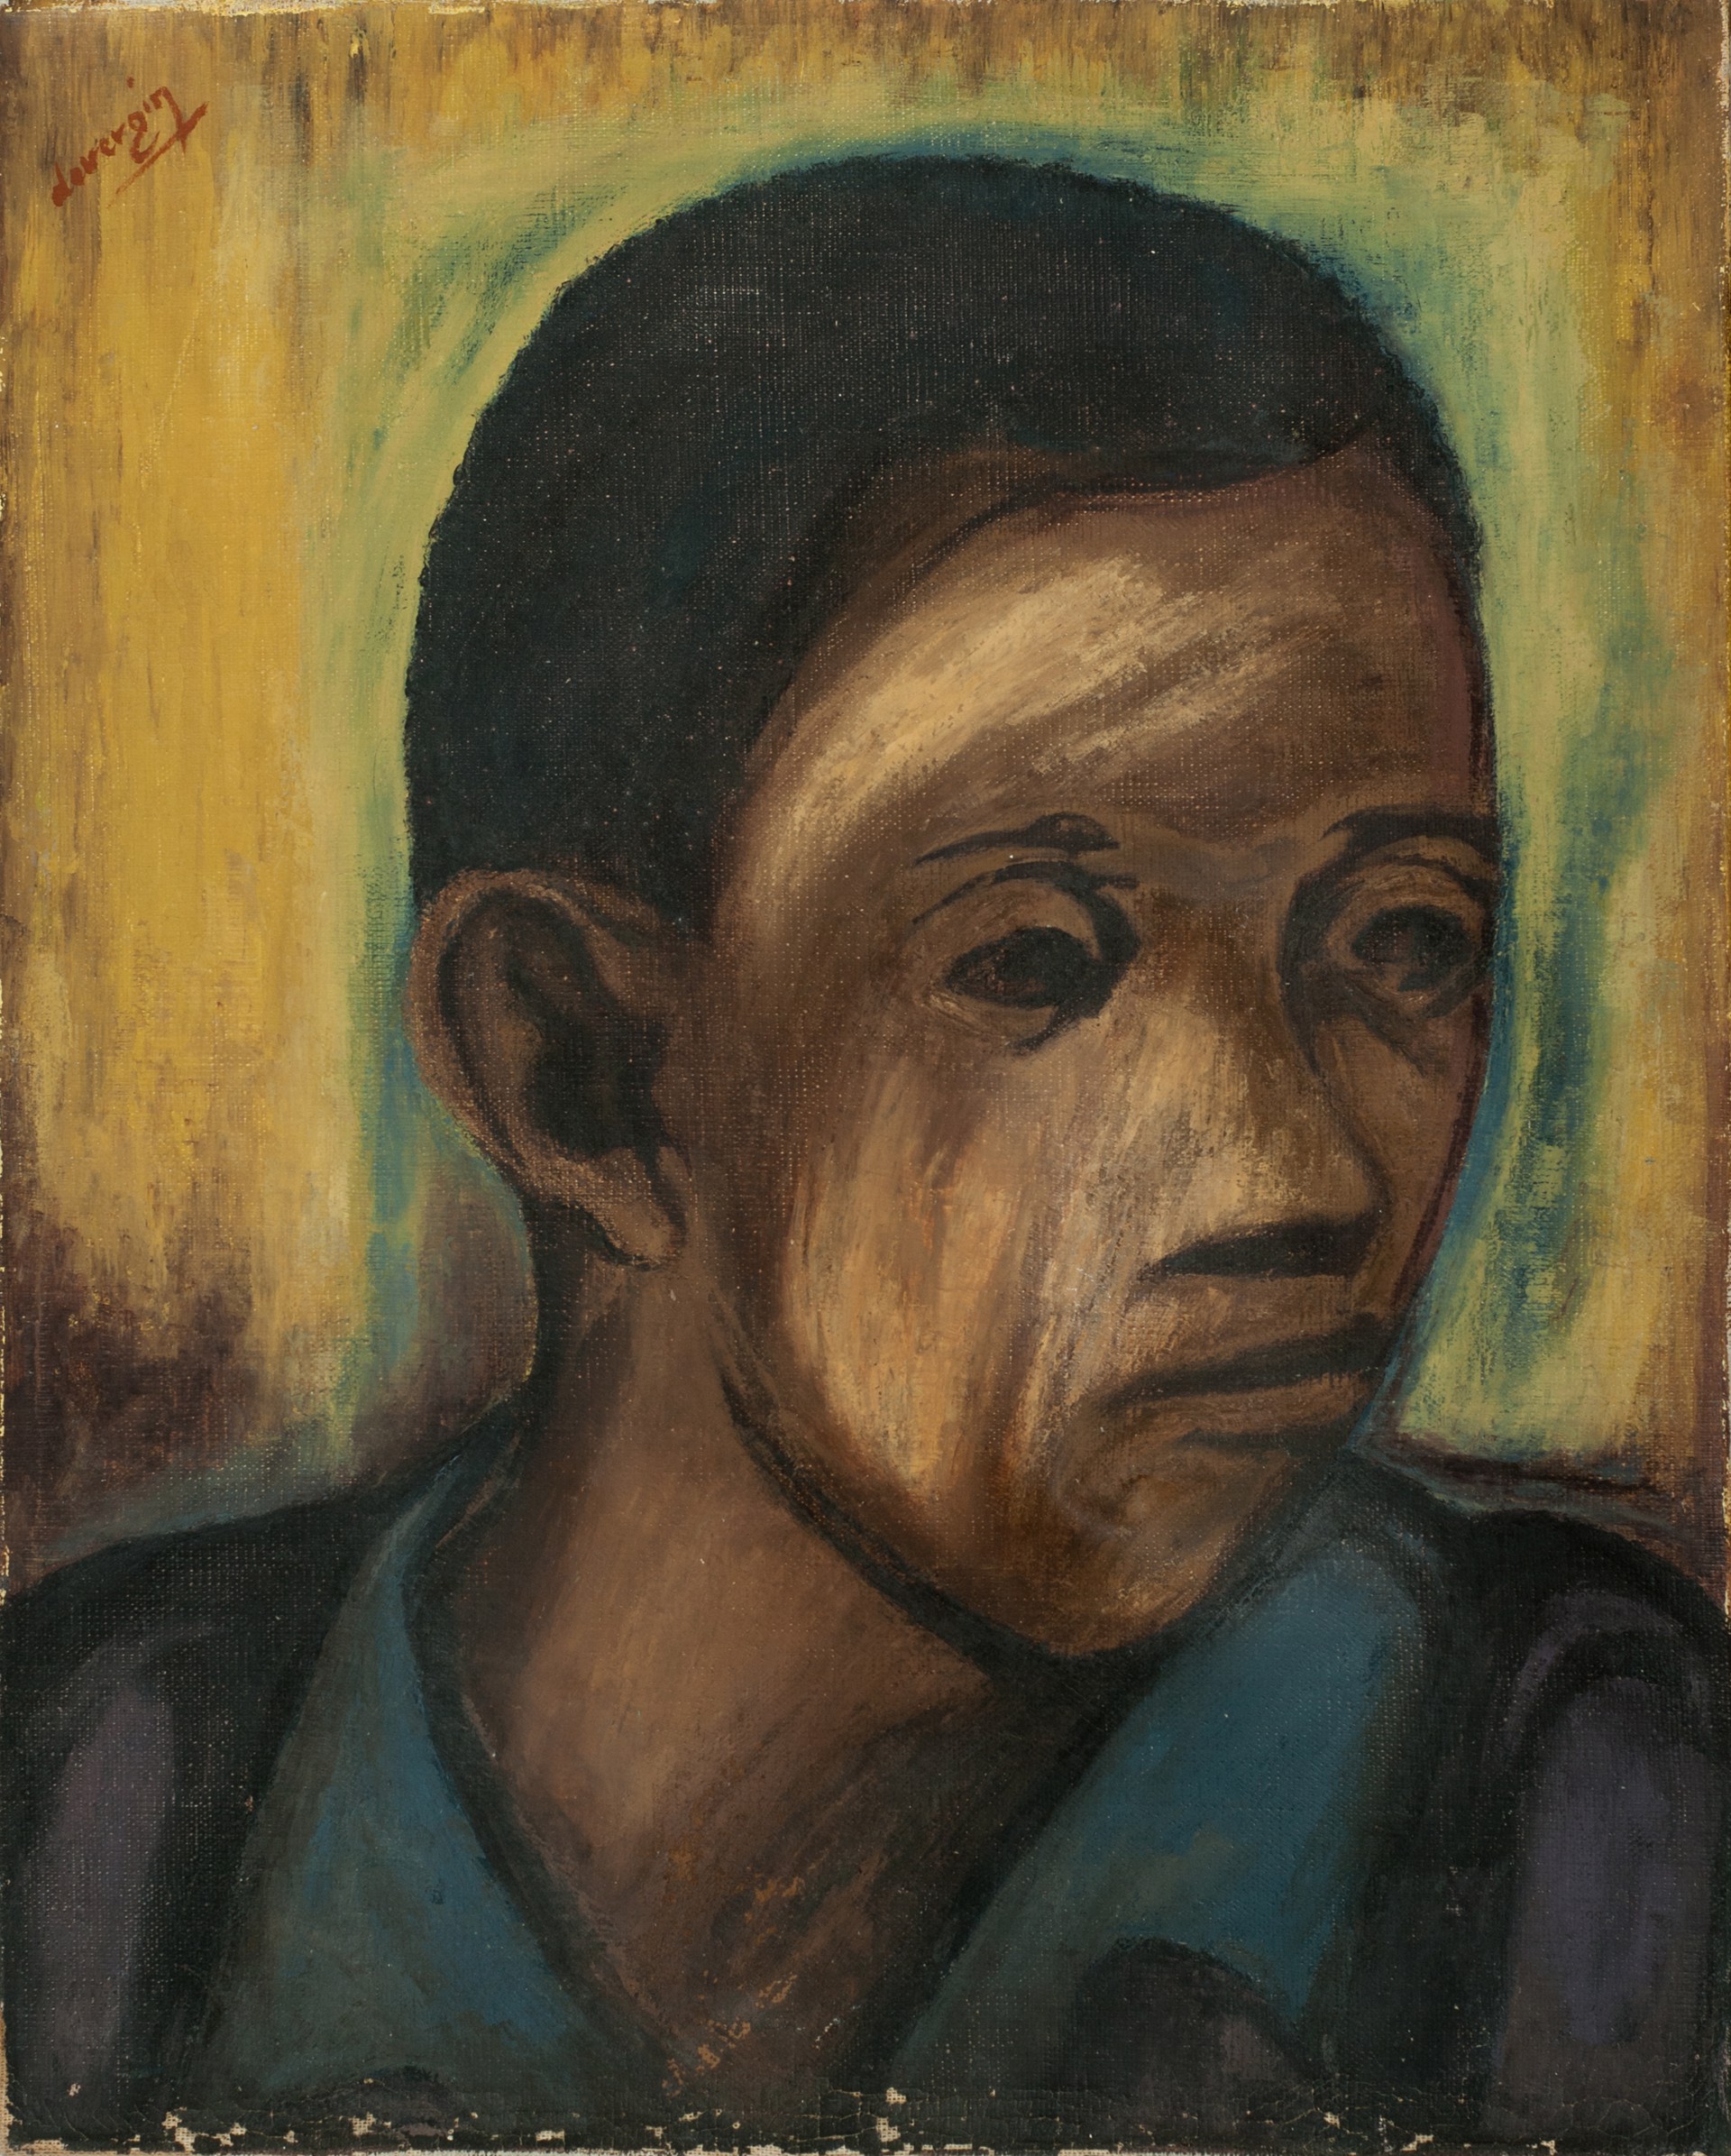 Boy Portrait #12-3-96GSN by Denis Vergin (Haitian, 1928-DCD)